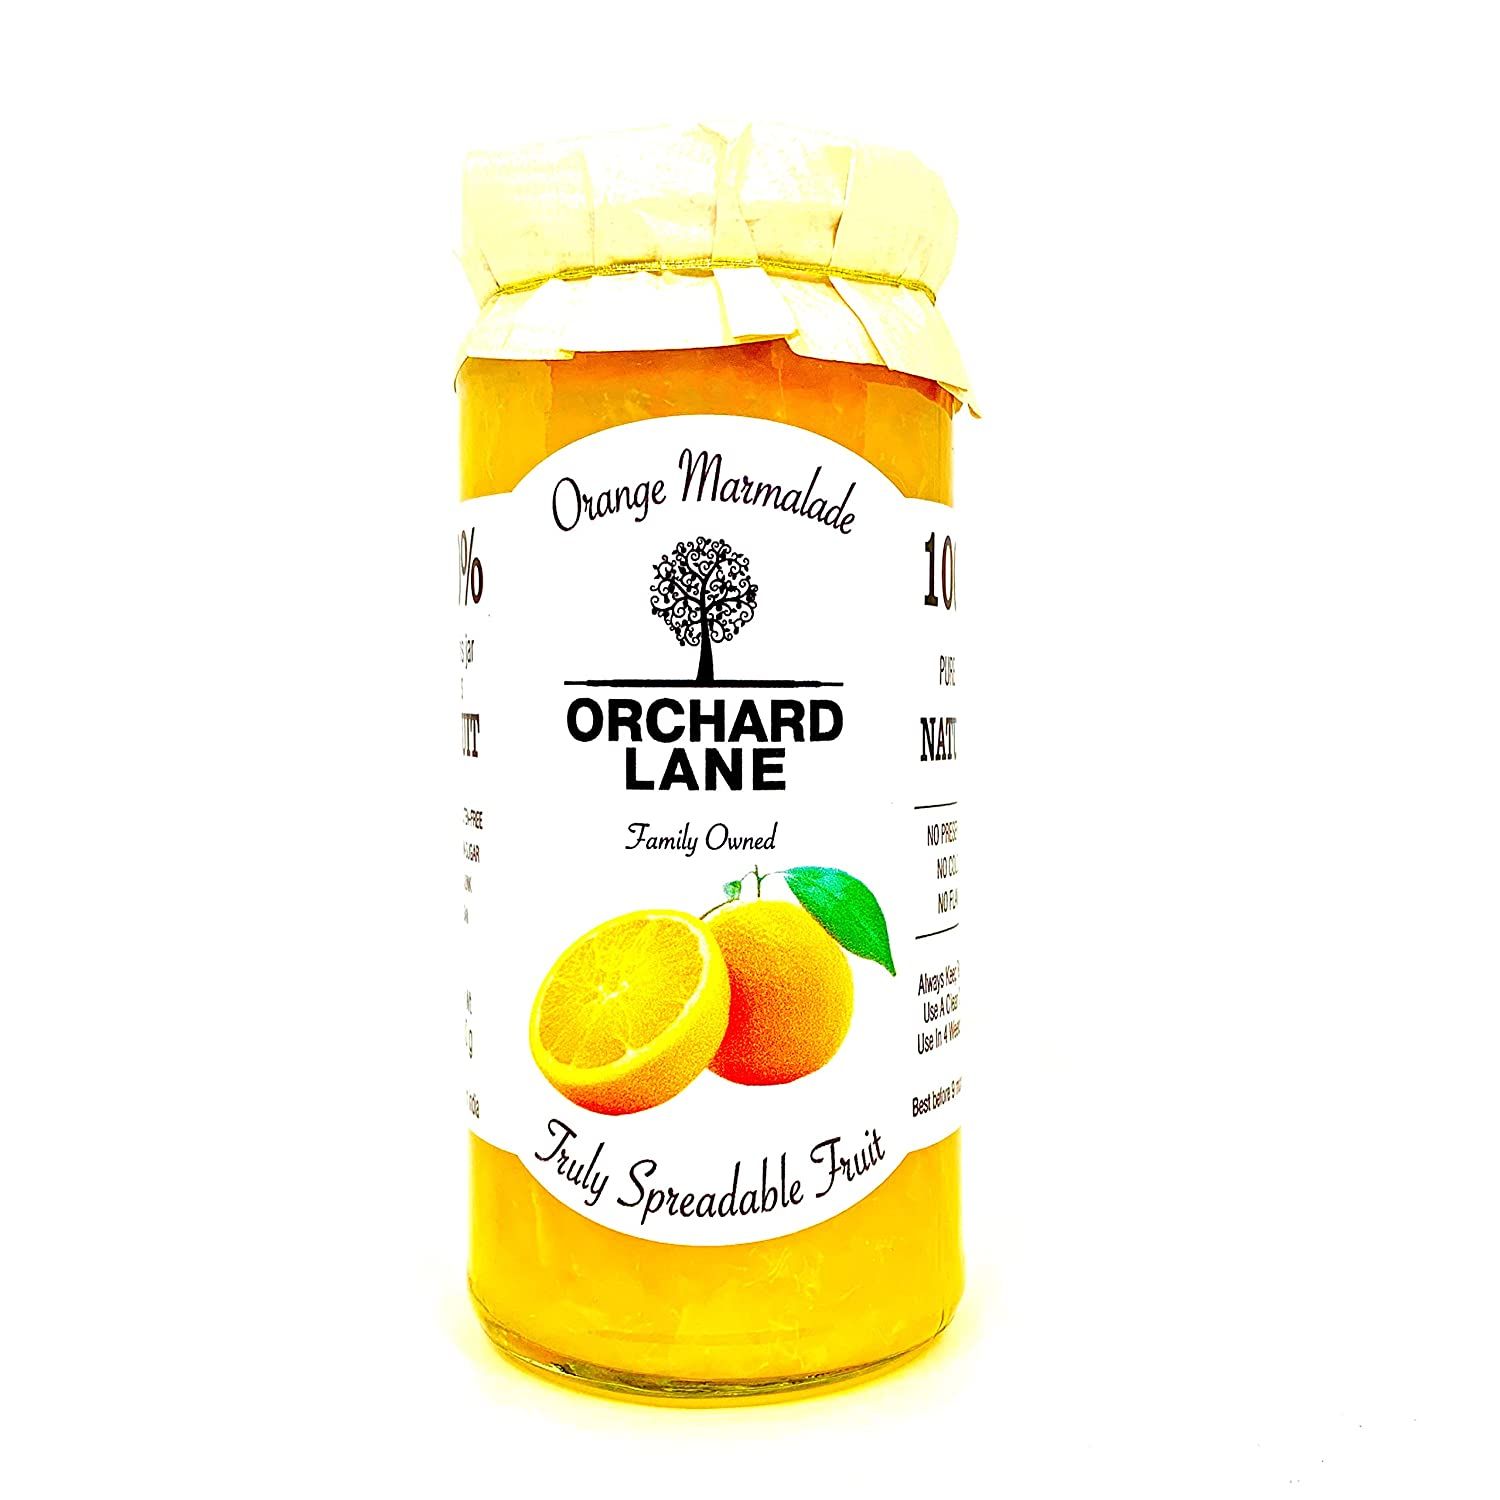 Orchard Lane Orange Marmalade Jam Image